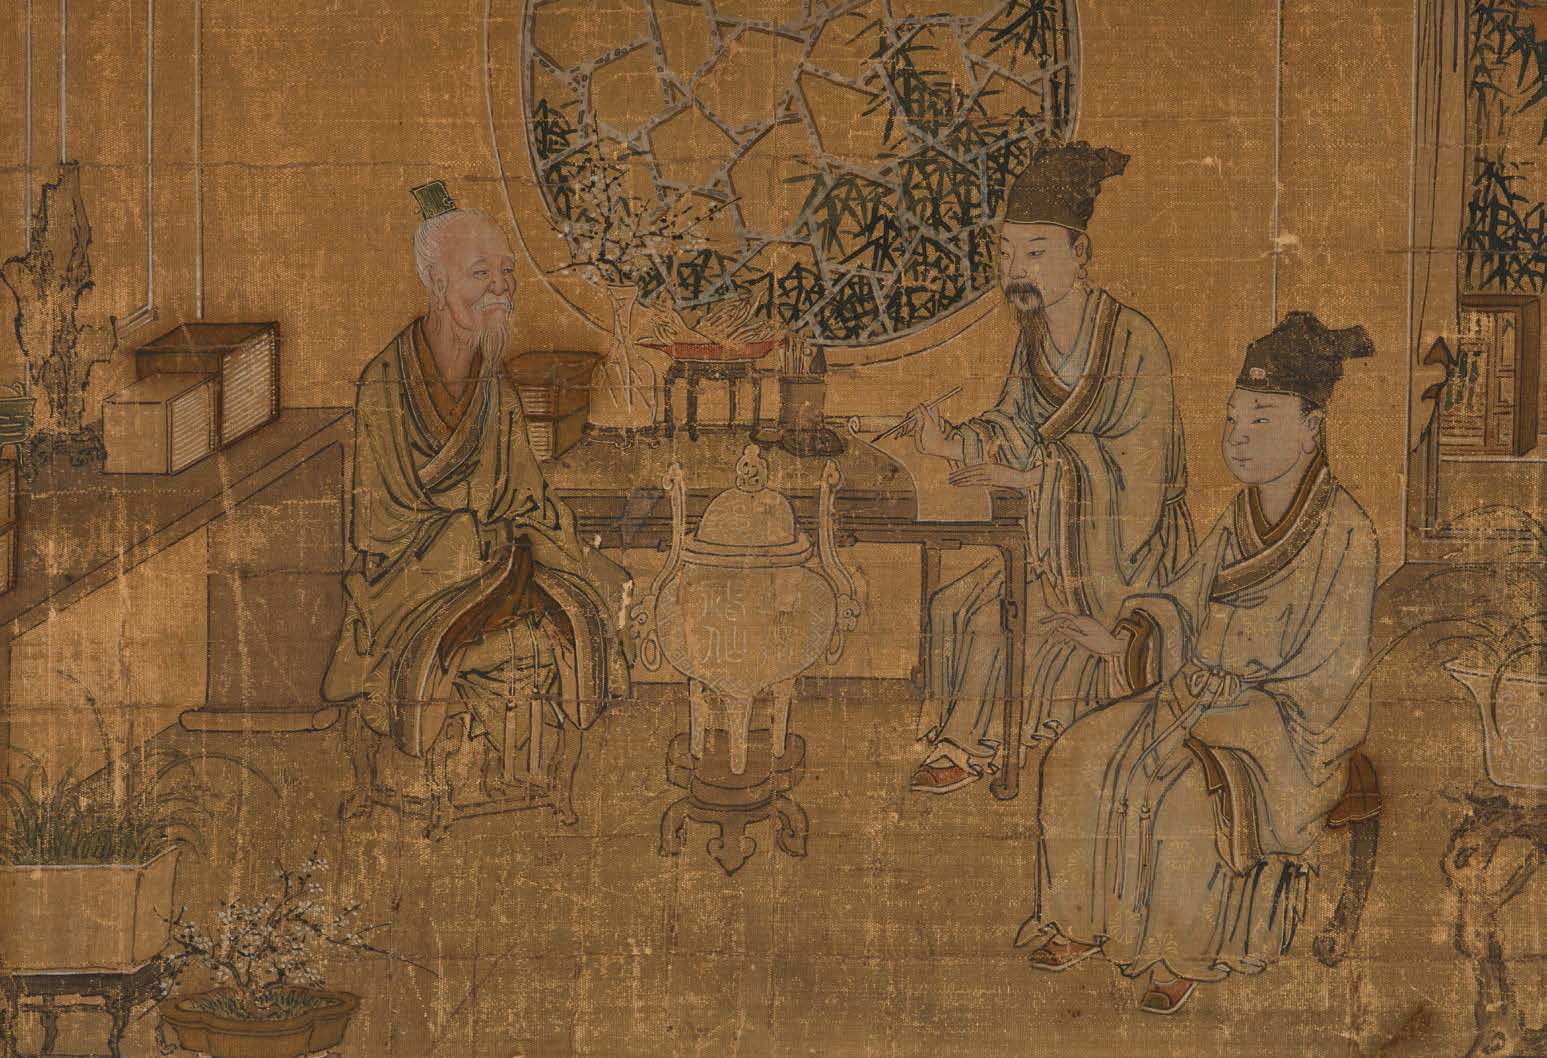 CHINE 中国
清代，十九世纪末
一对横幅画，水墨和镶金彩色帛画，表达多人在花园和室内场景。
23 x32.5厘米
（有小孔和磨损）